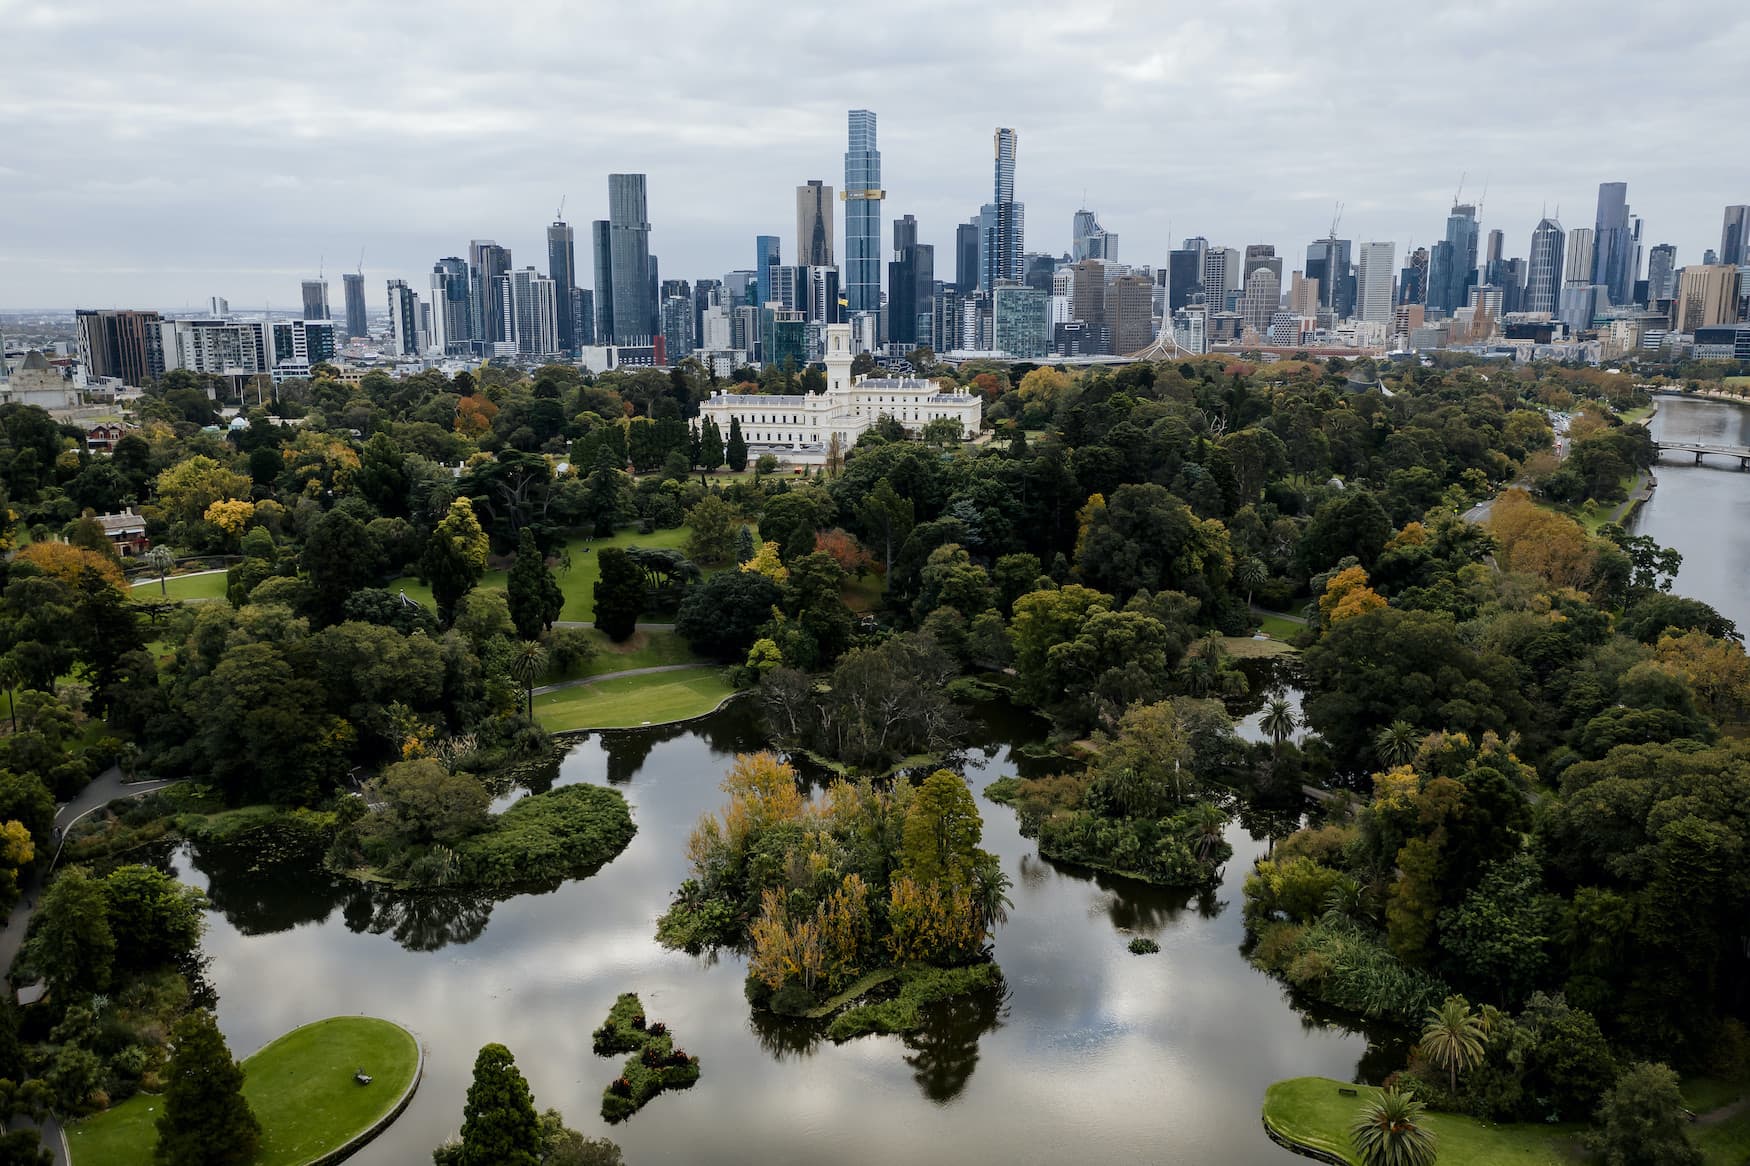 Royal Botanic Garden in Melbourne